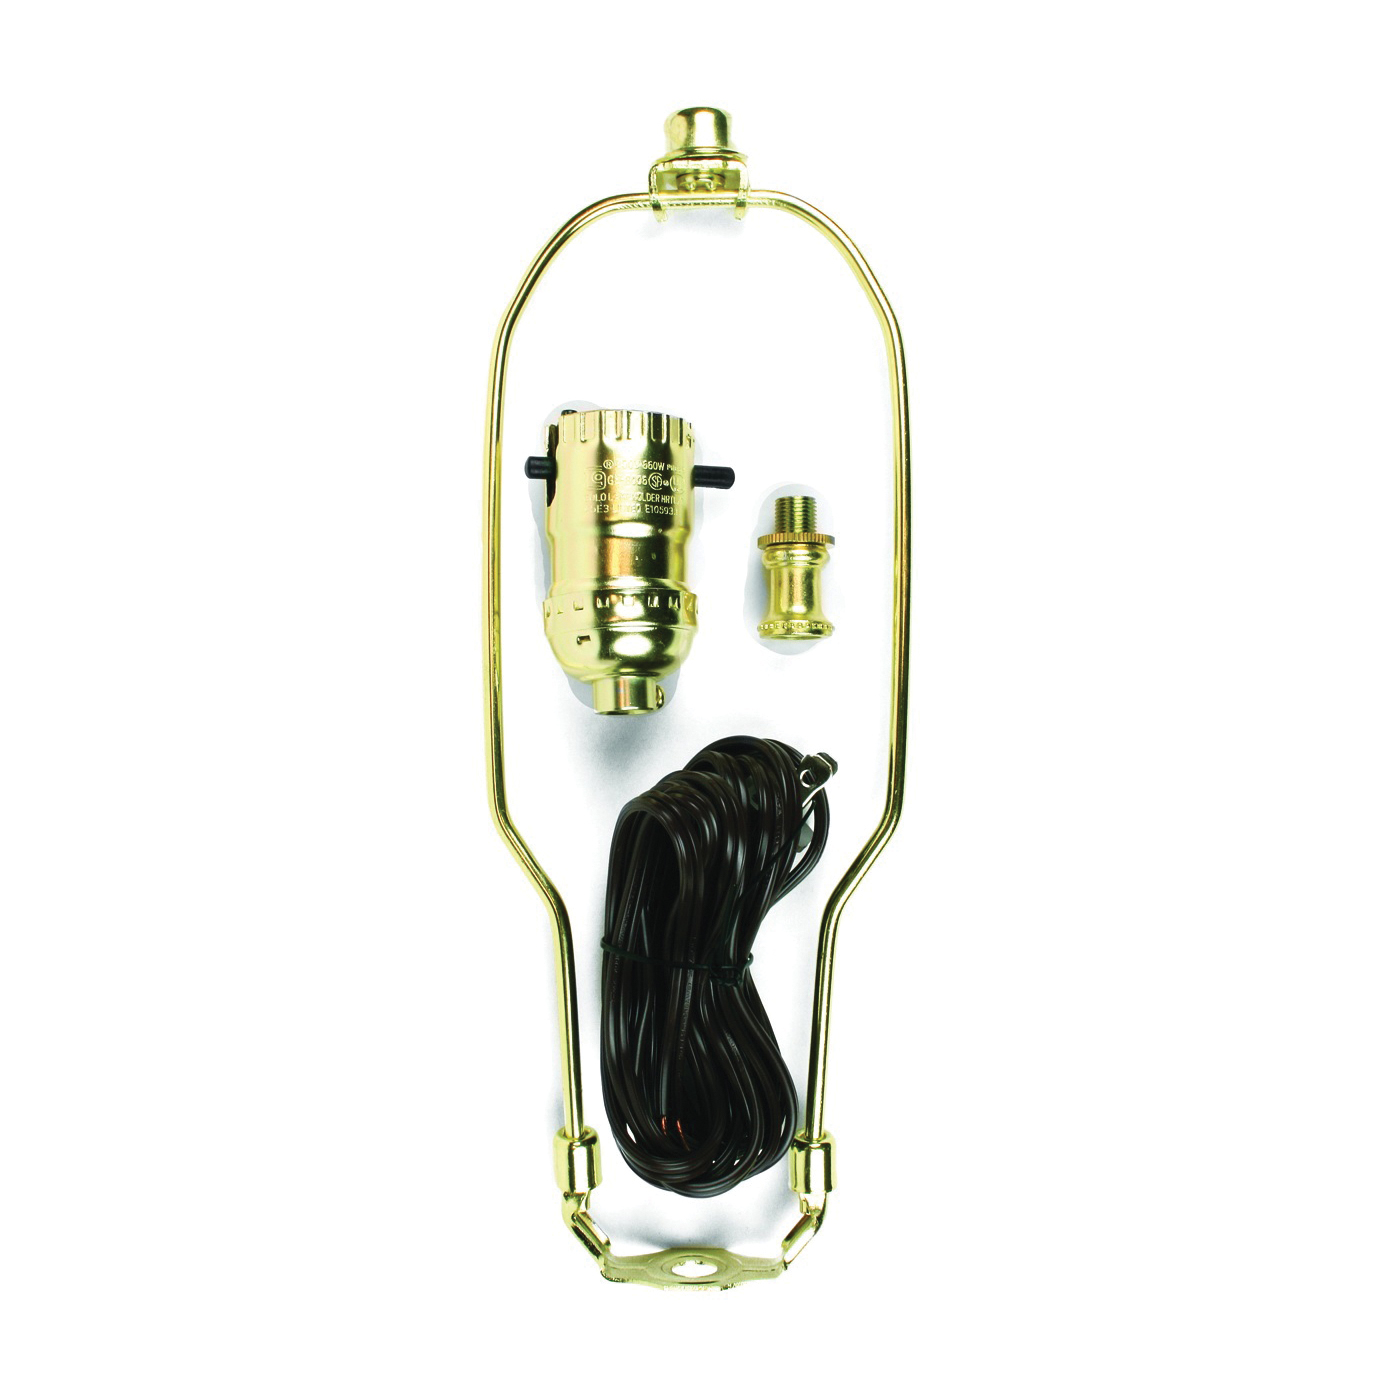 60132 Lamp Kit, Brass, Polished Harp